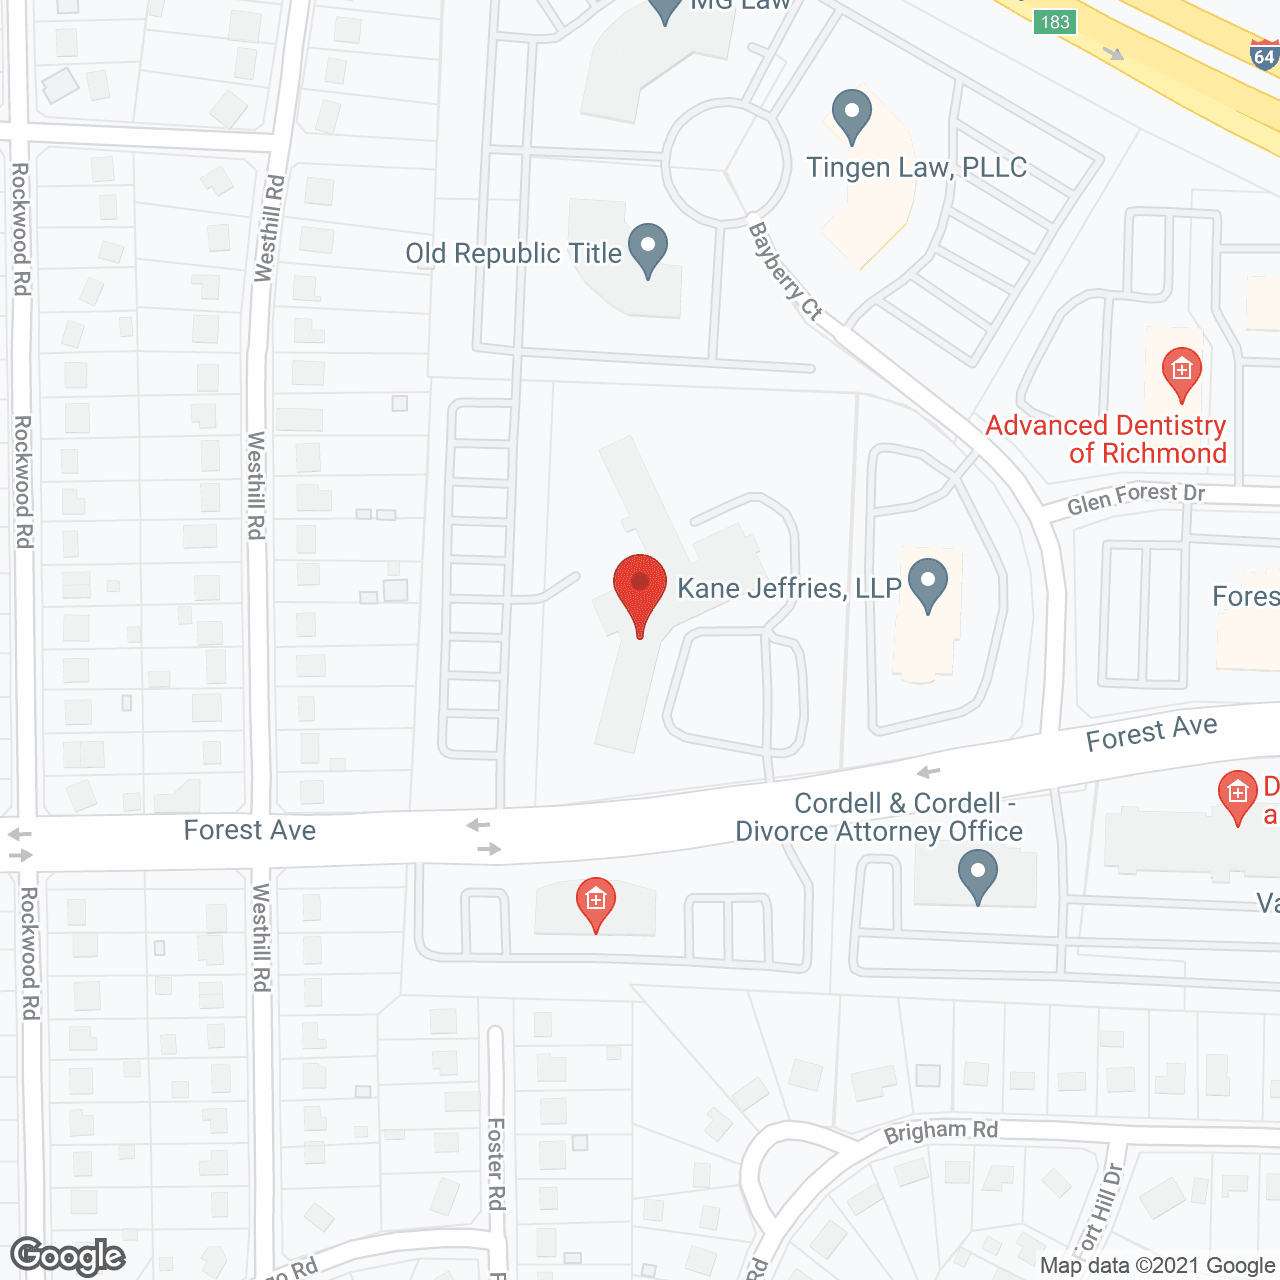 Westport Rehabilitation and Nursing Center in google map